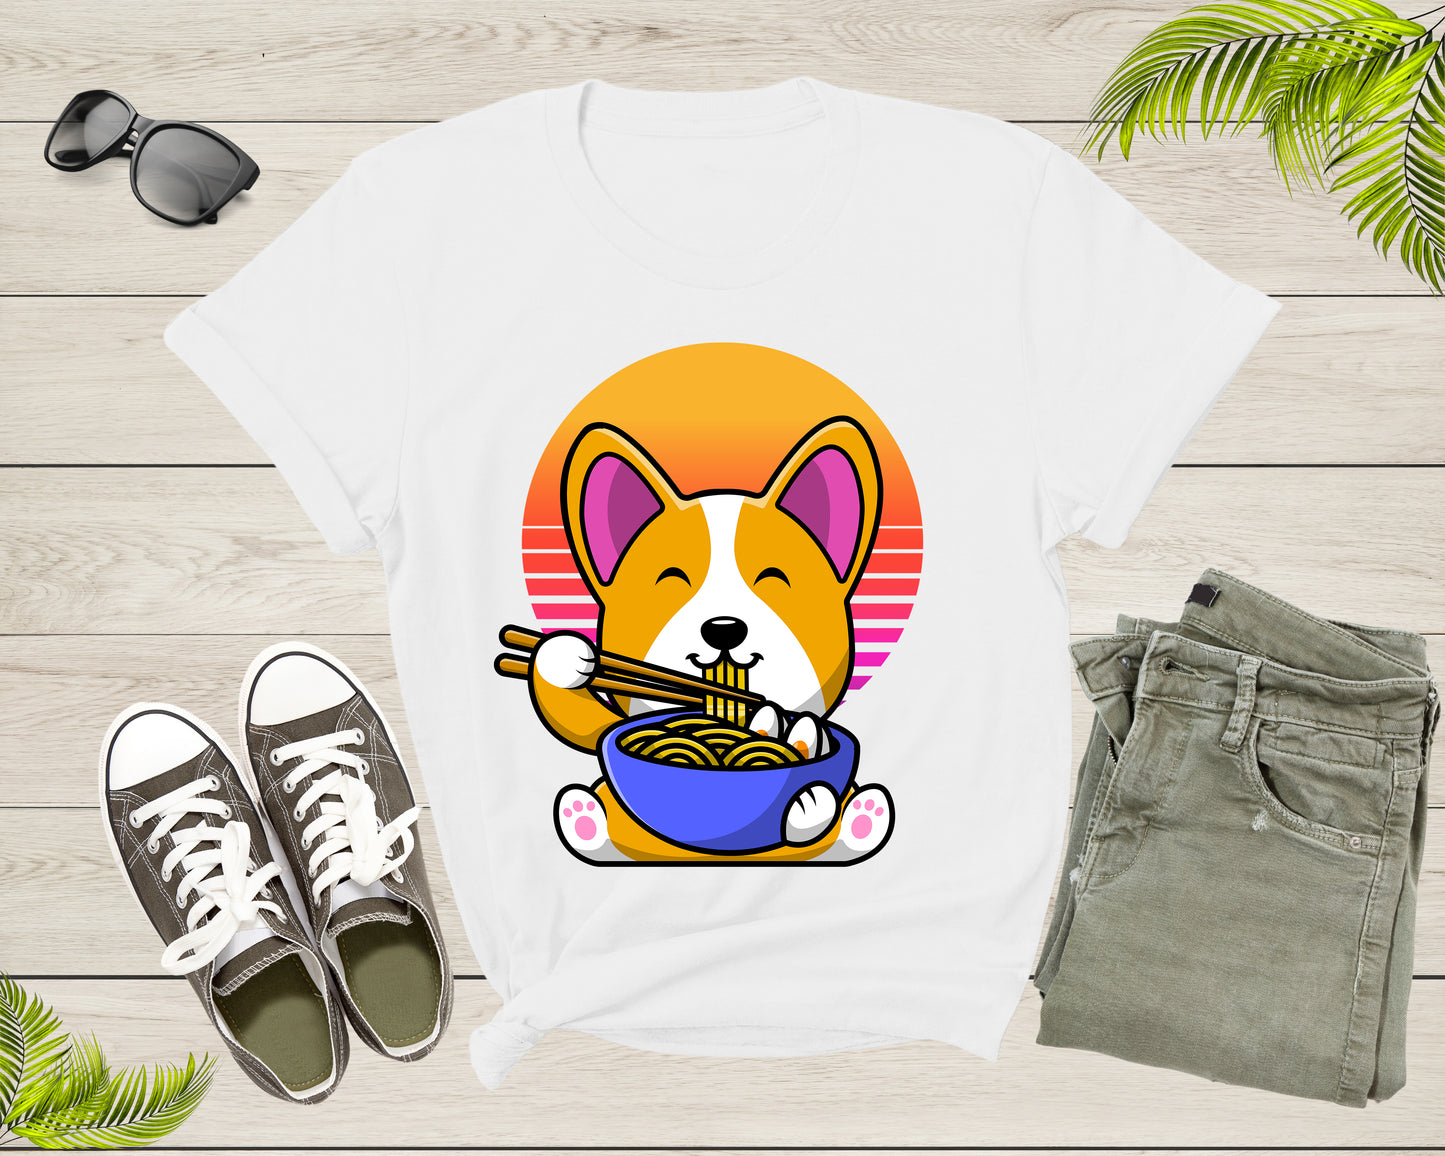 Cute Dog Mascot Eating Japanese Ramen Noodle Retro Sunset T-Shirt Ramen Lover Gift T Shirt for Men Women Kids Boys Girls Graphic Tshirt